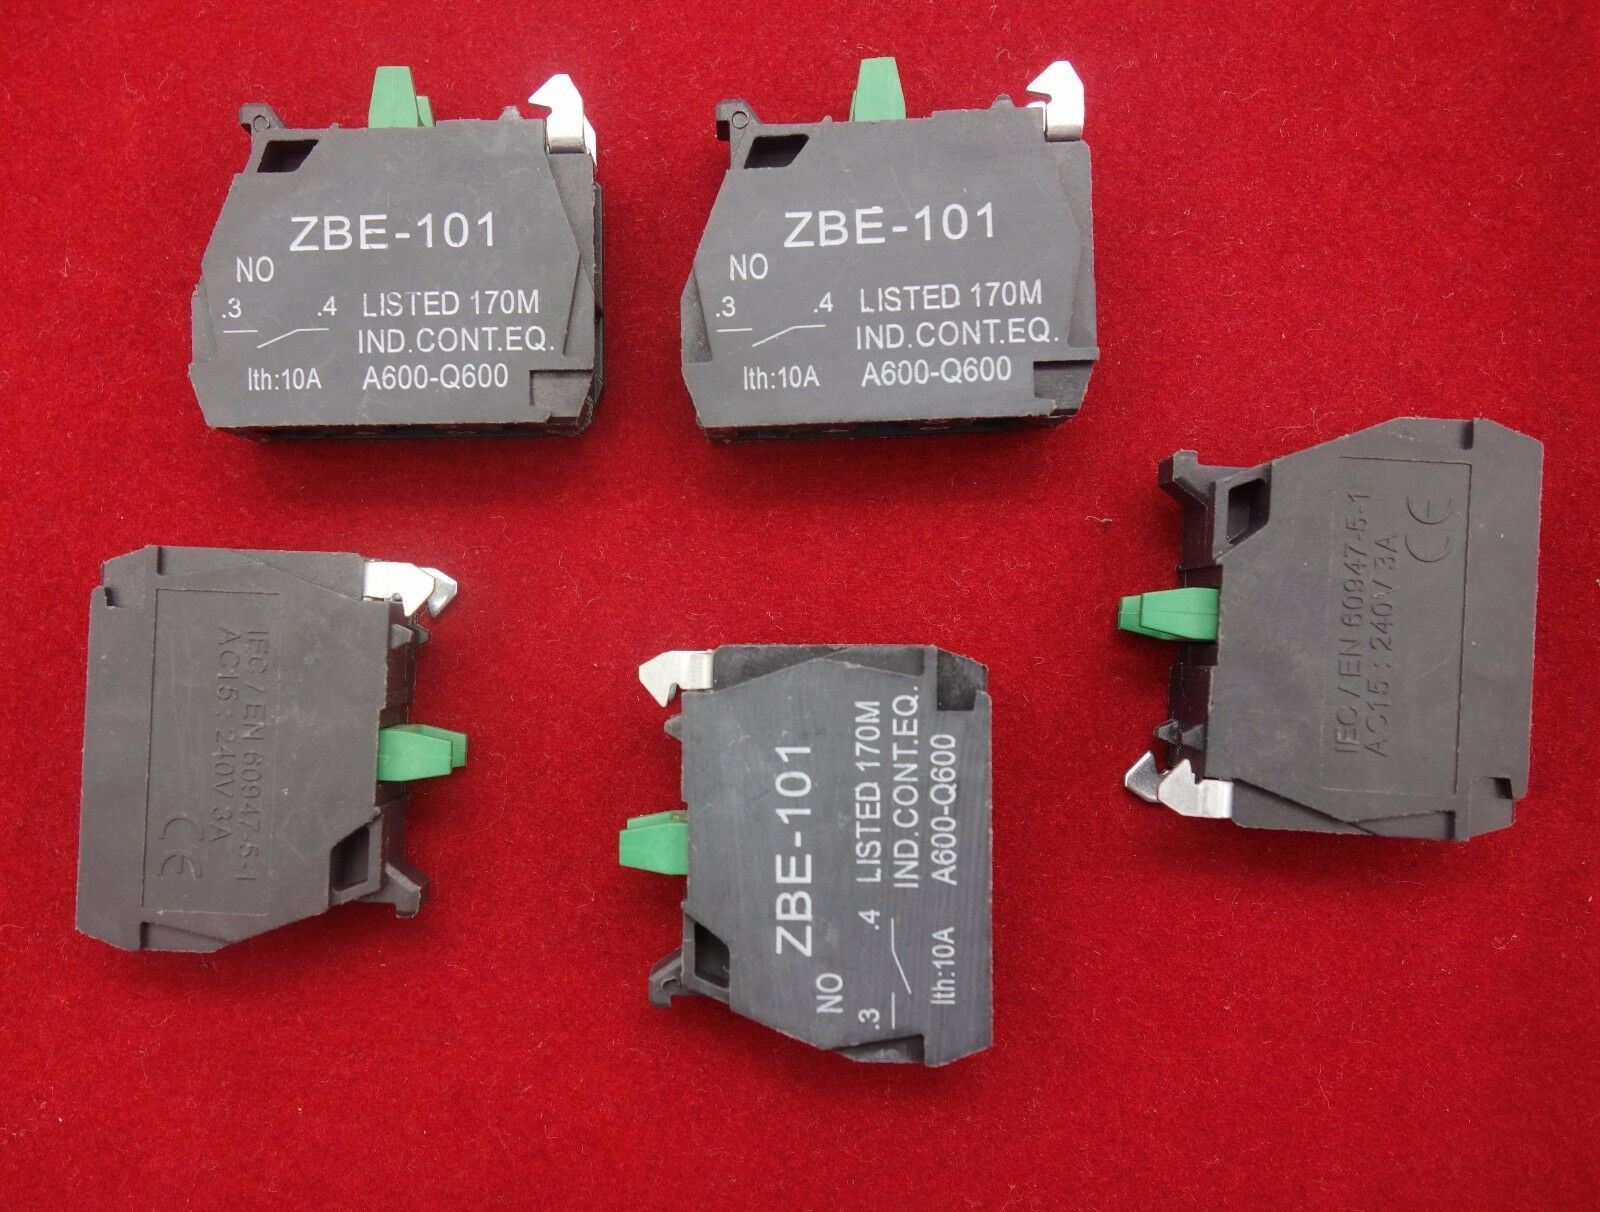 10PCS ZBE-101 N/O CONTACT BLOCK FITS XB4 XB5 Series Products